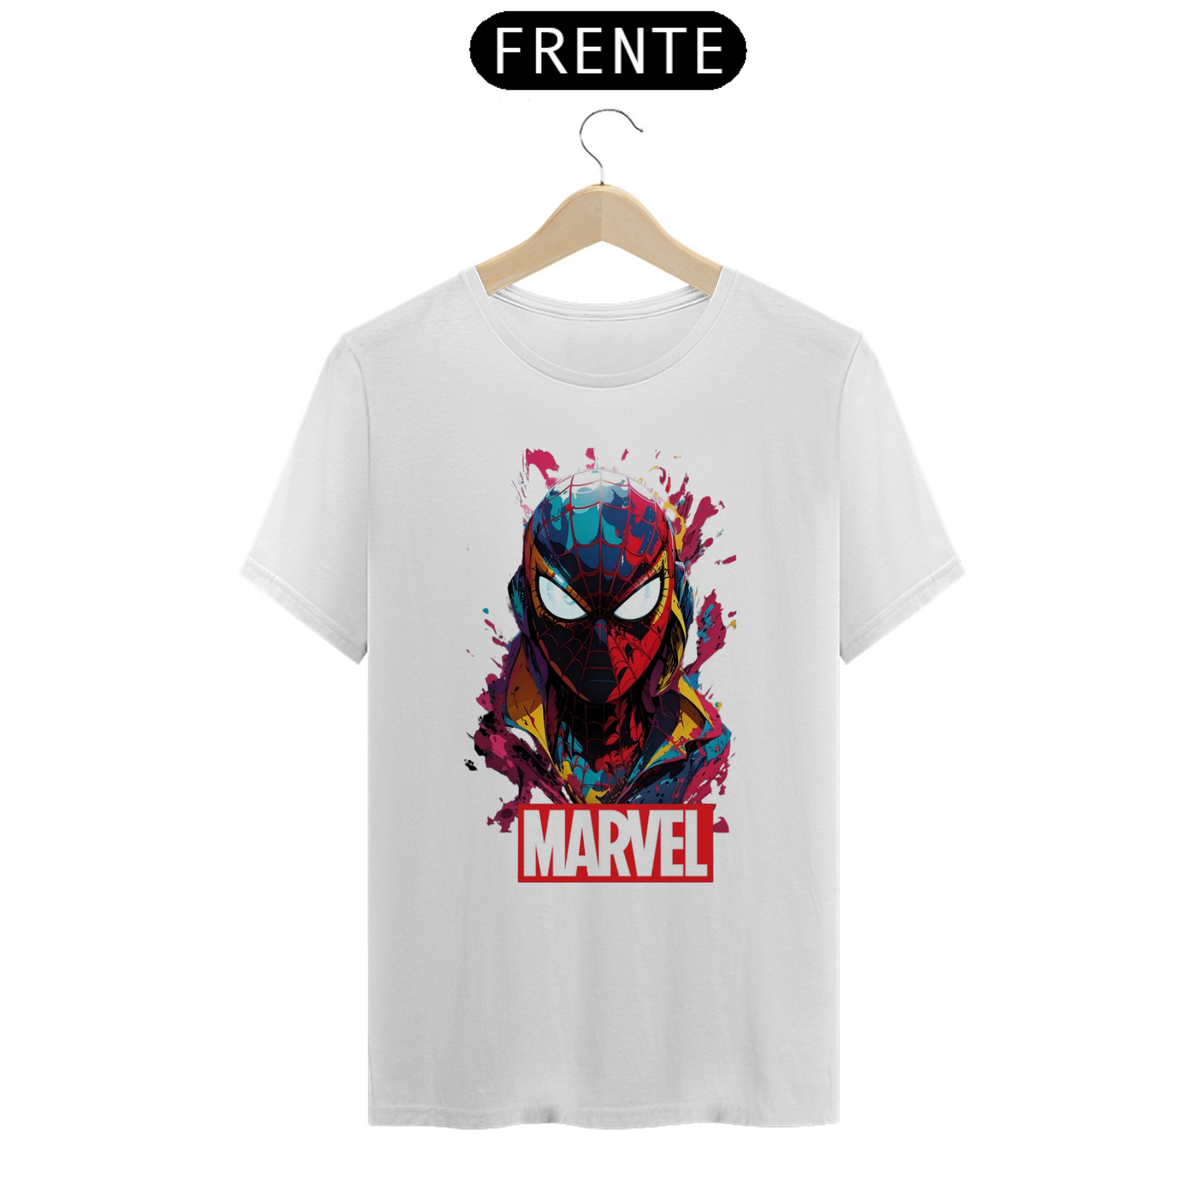 Nome do produto: Camiseta Spider man